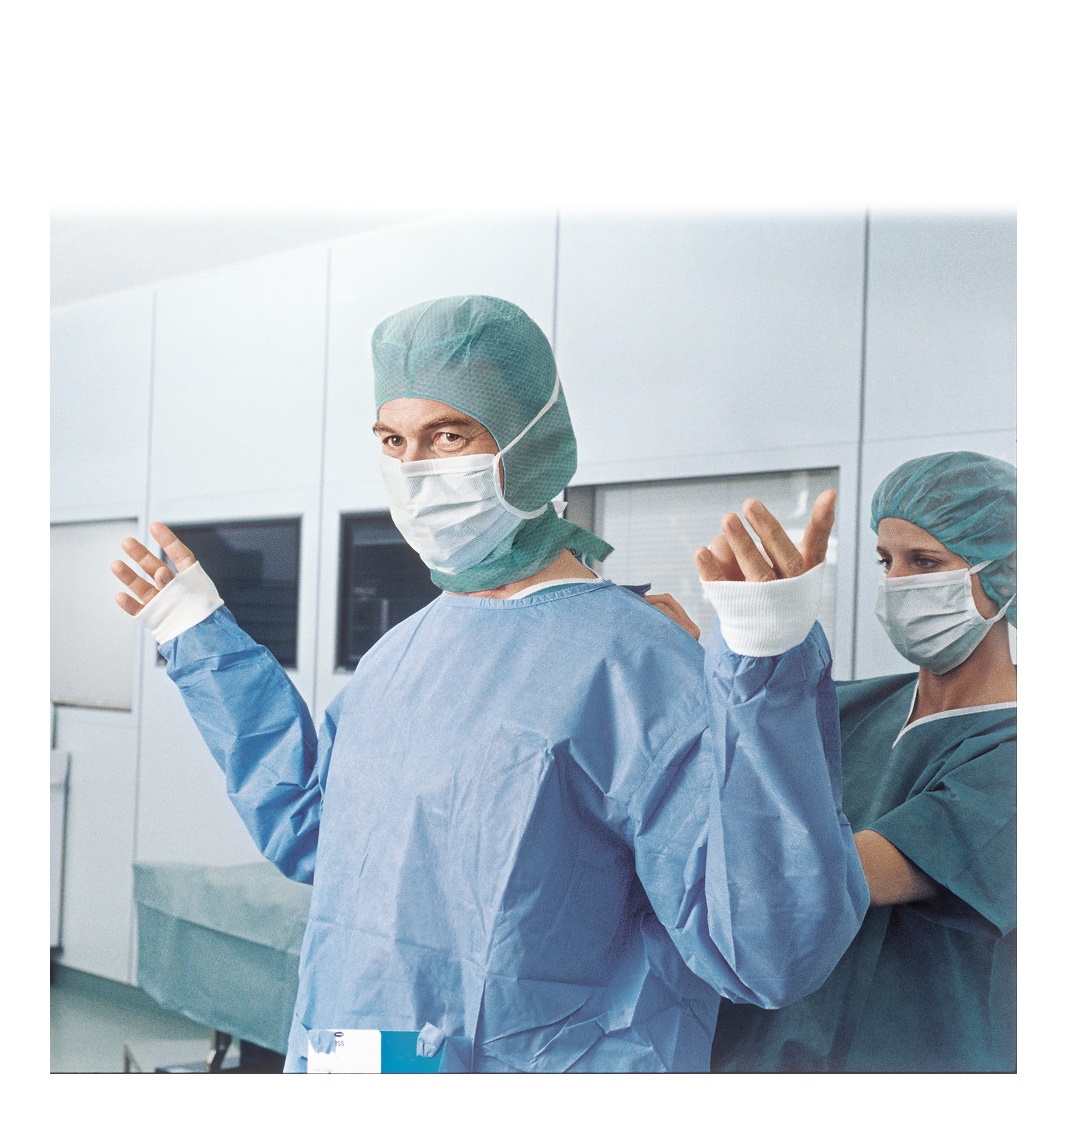 Ubiory chirurgiczne Foliodress - Fartuchy chirurgiczne Foliodress Protect i Comfort